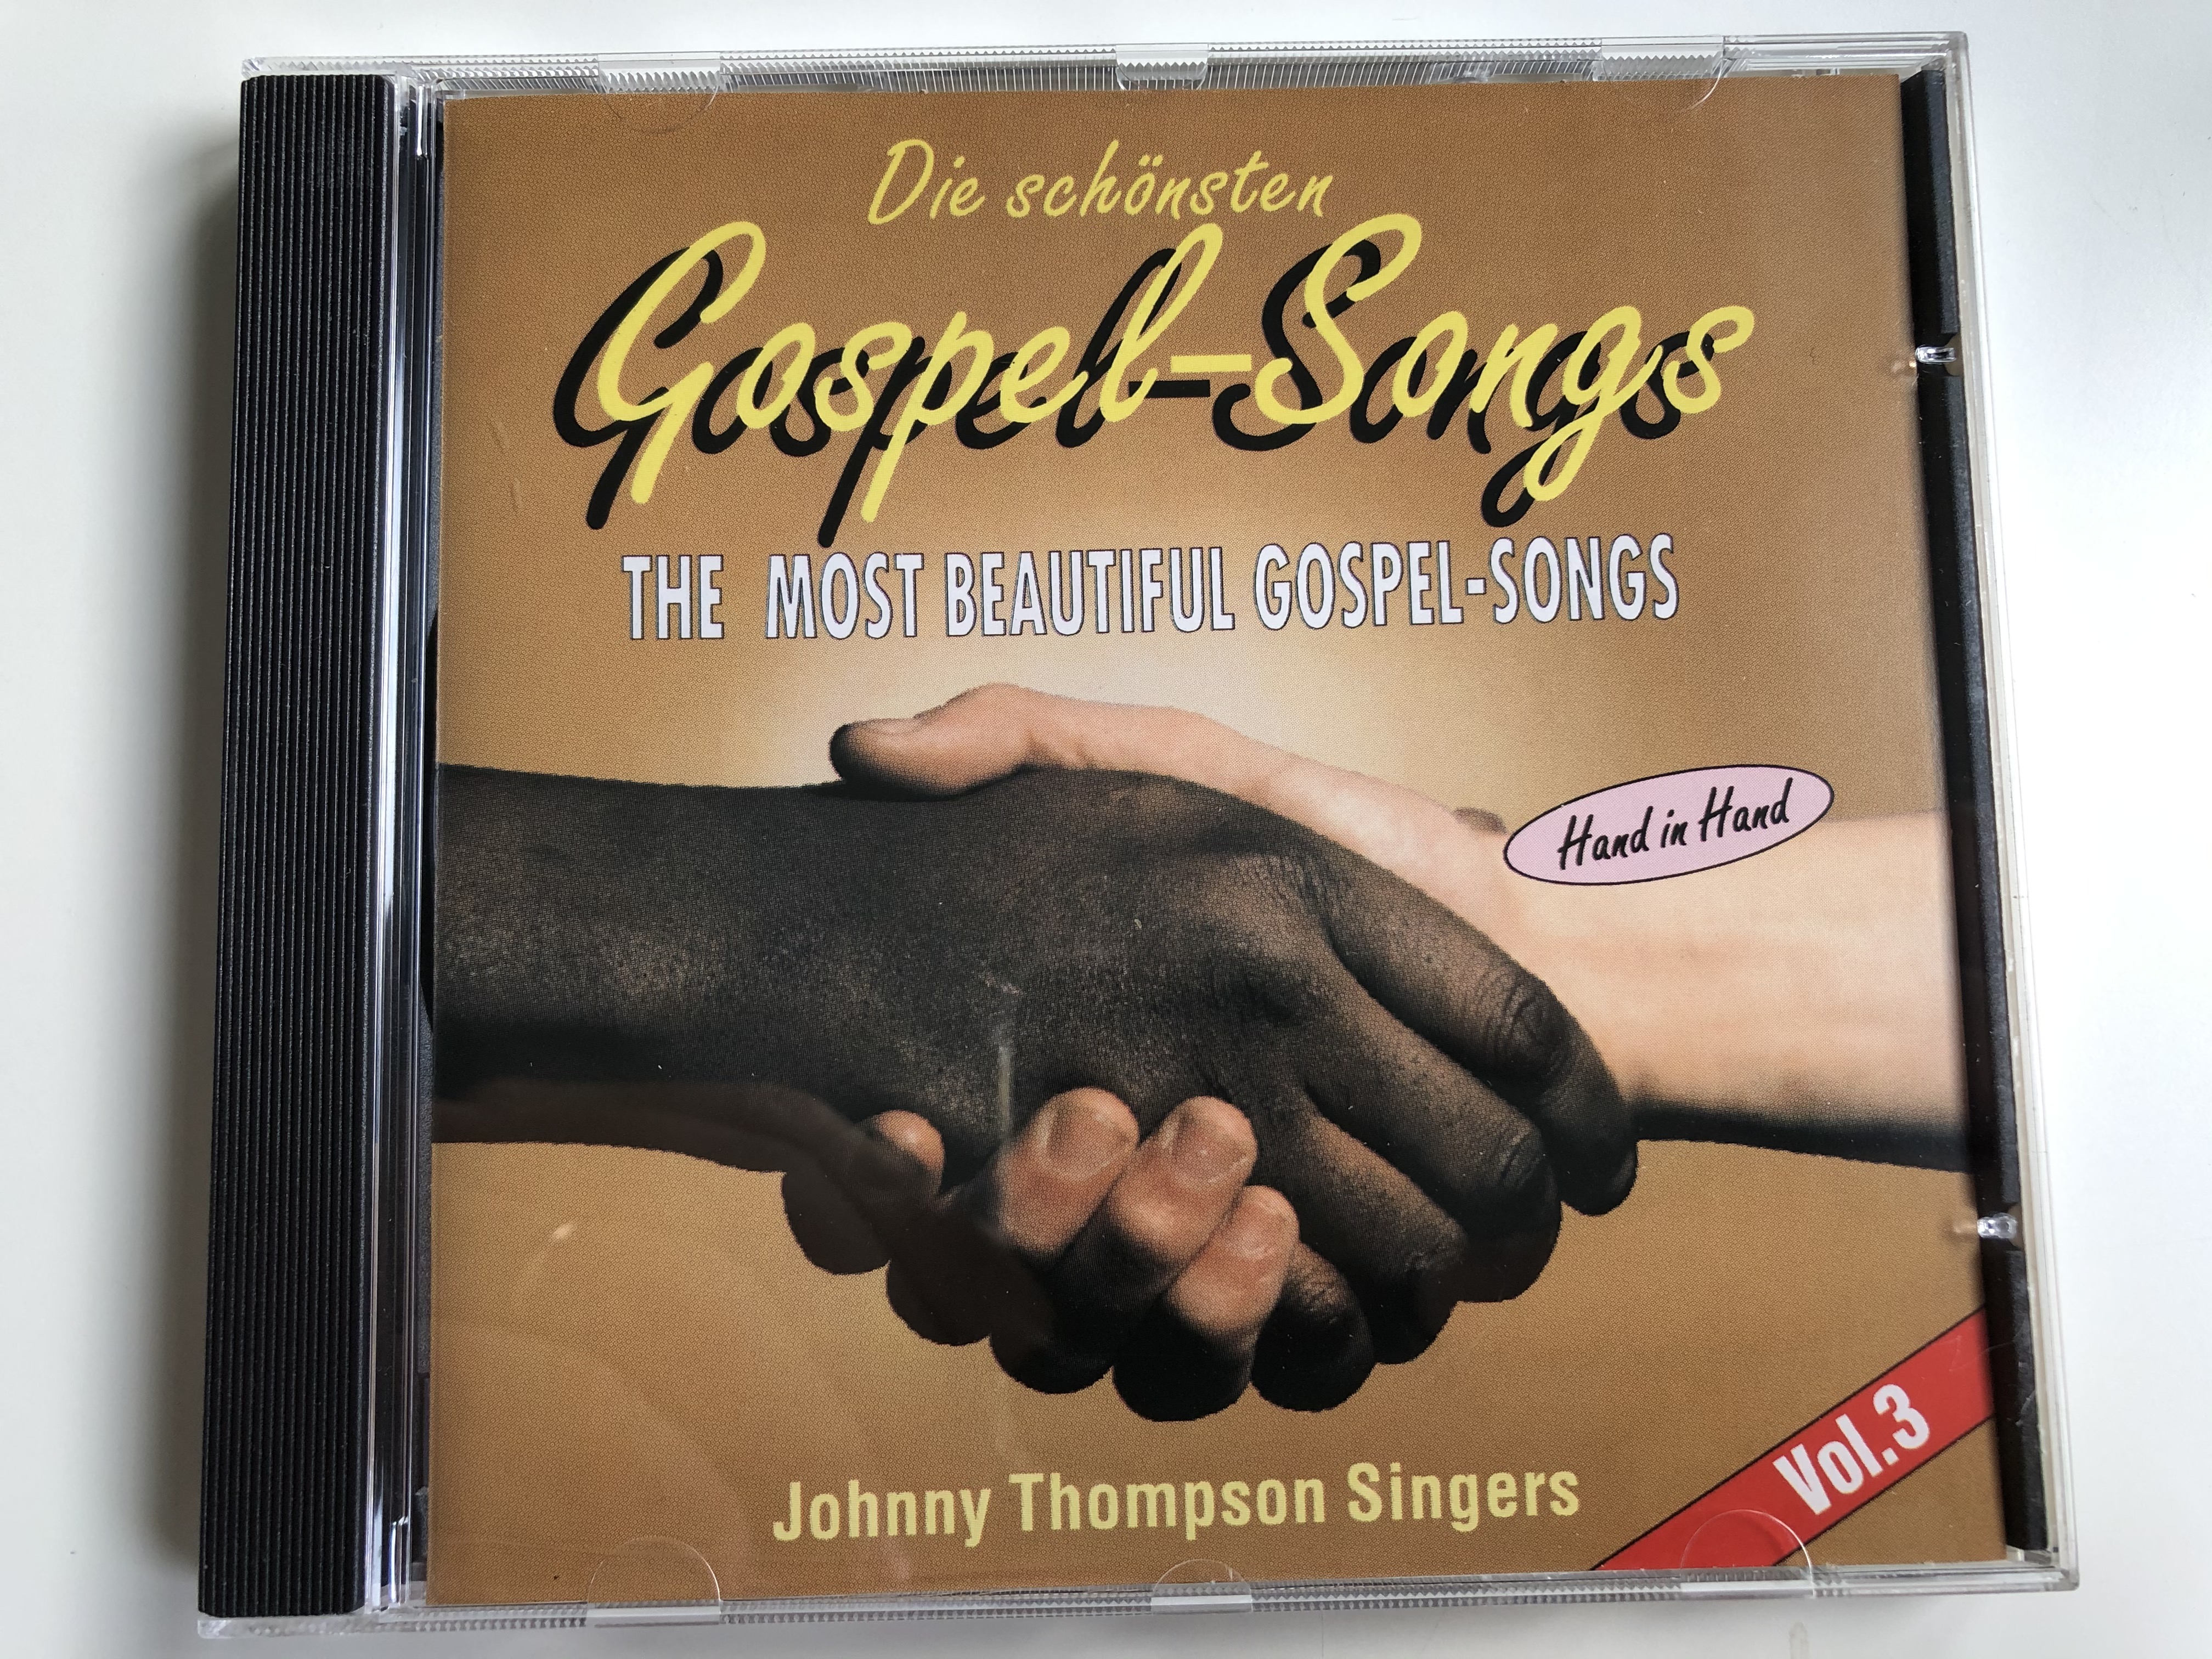 die-schonsten-gospel-songs-the-most-beautiful-gospel-songs-hand-in-hand-johnny-thompson-singers-high-grade-3x-audio-cd-105-11-.jpg